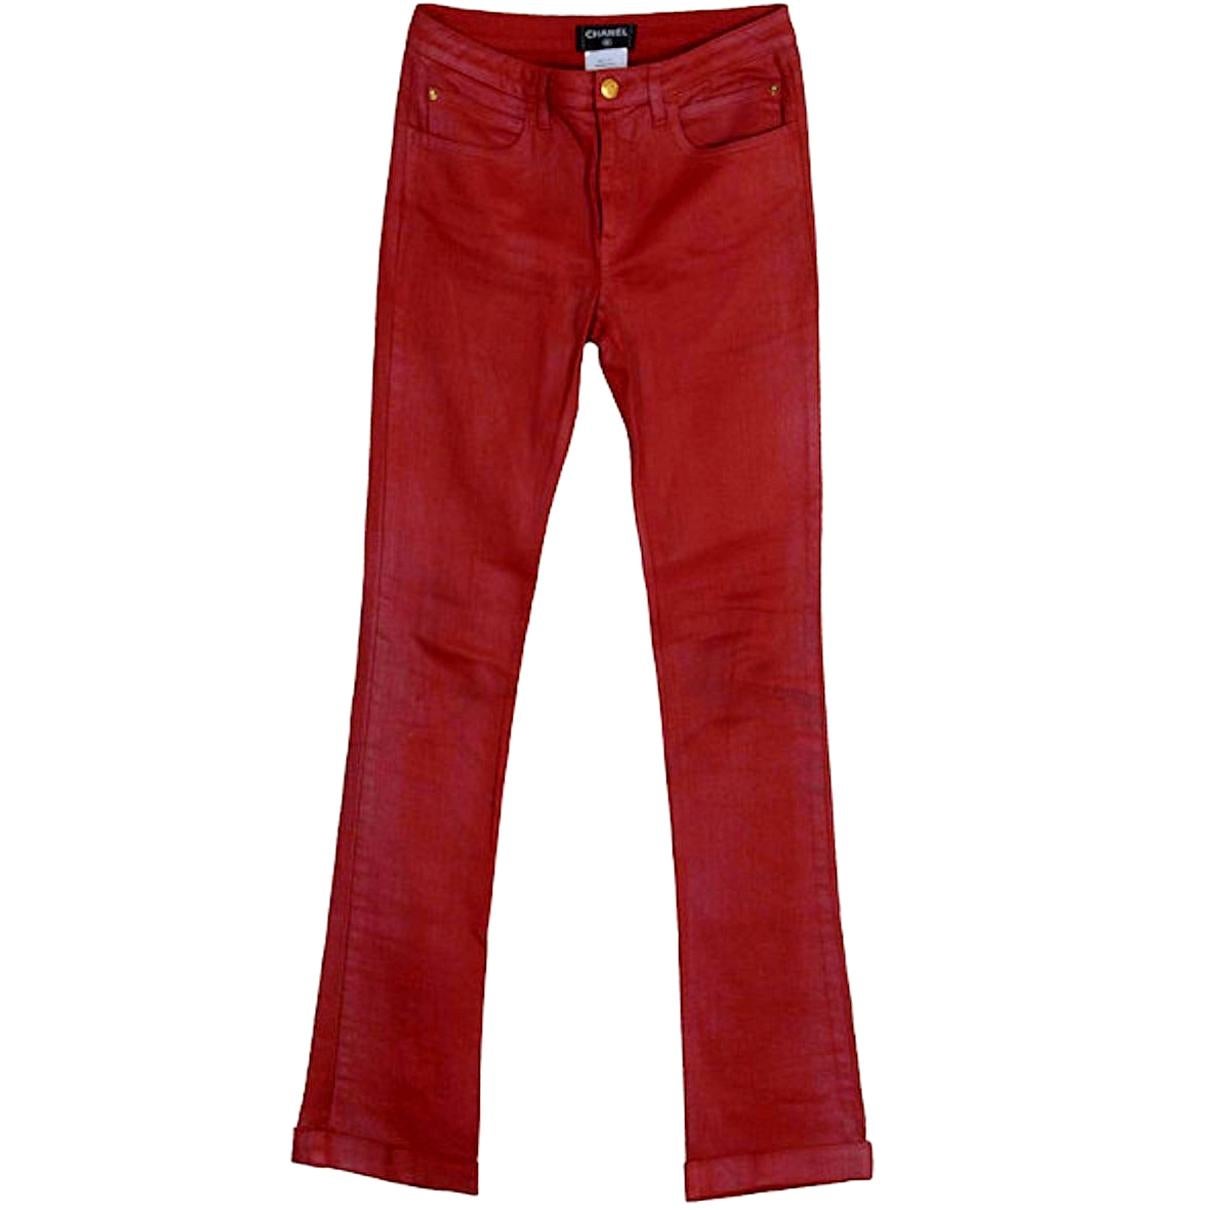 NEW Red Chanel Stretch Denim Jeans Pants CC Logo Pockets